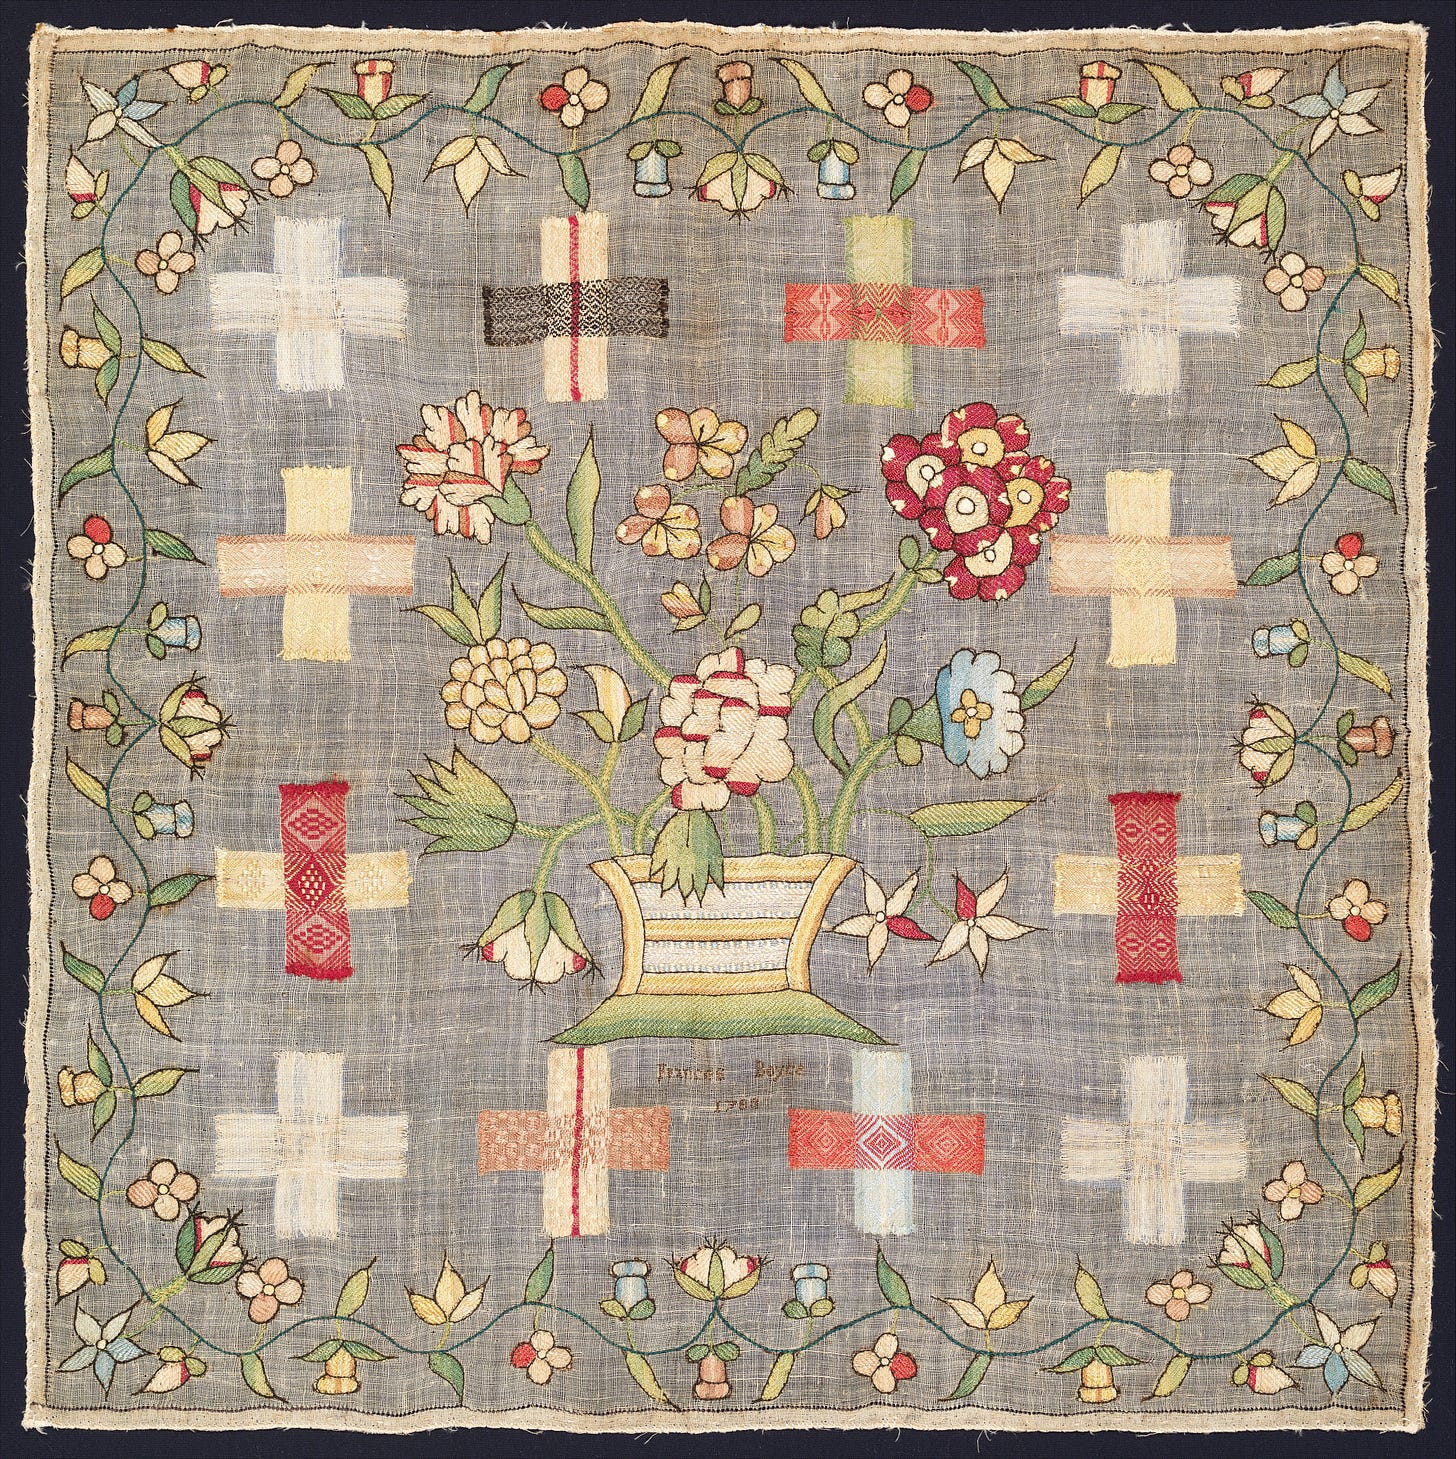 Embroidered darning sampler, Frances Boyce (British), Silk embroidery on linen, British